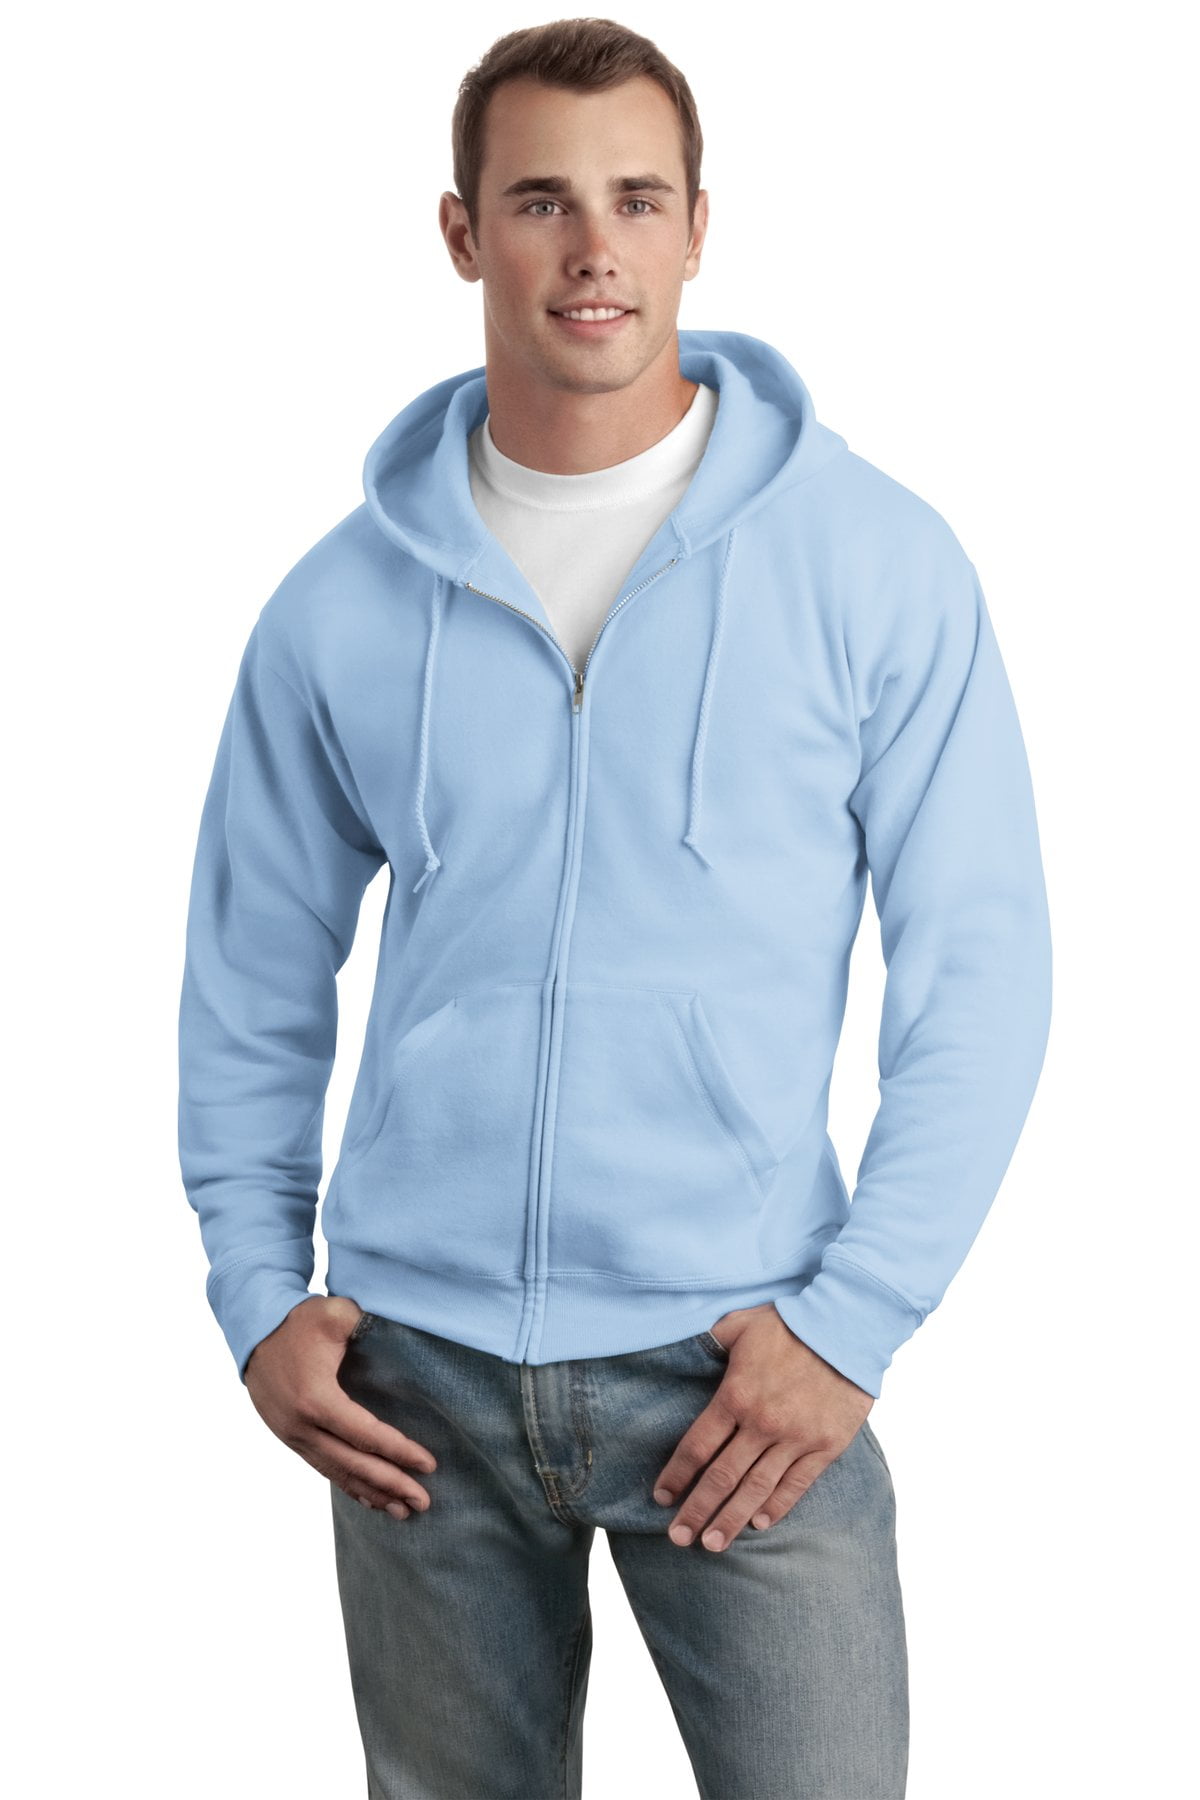 Hanes - Hanes Men's Long Sleeve Full-Zip Hooded Sweatshirt - P180 ...